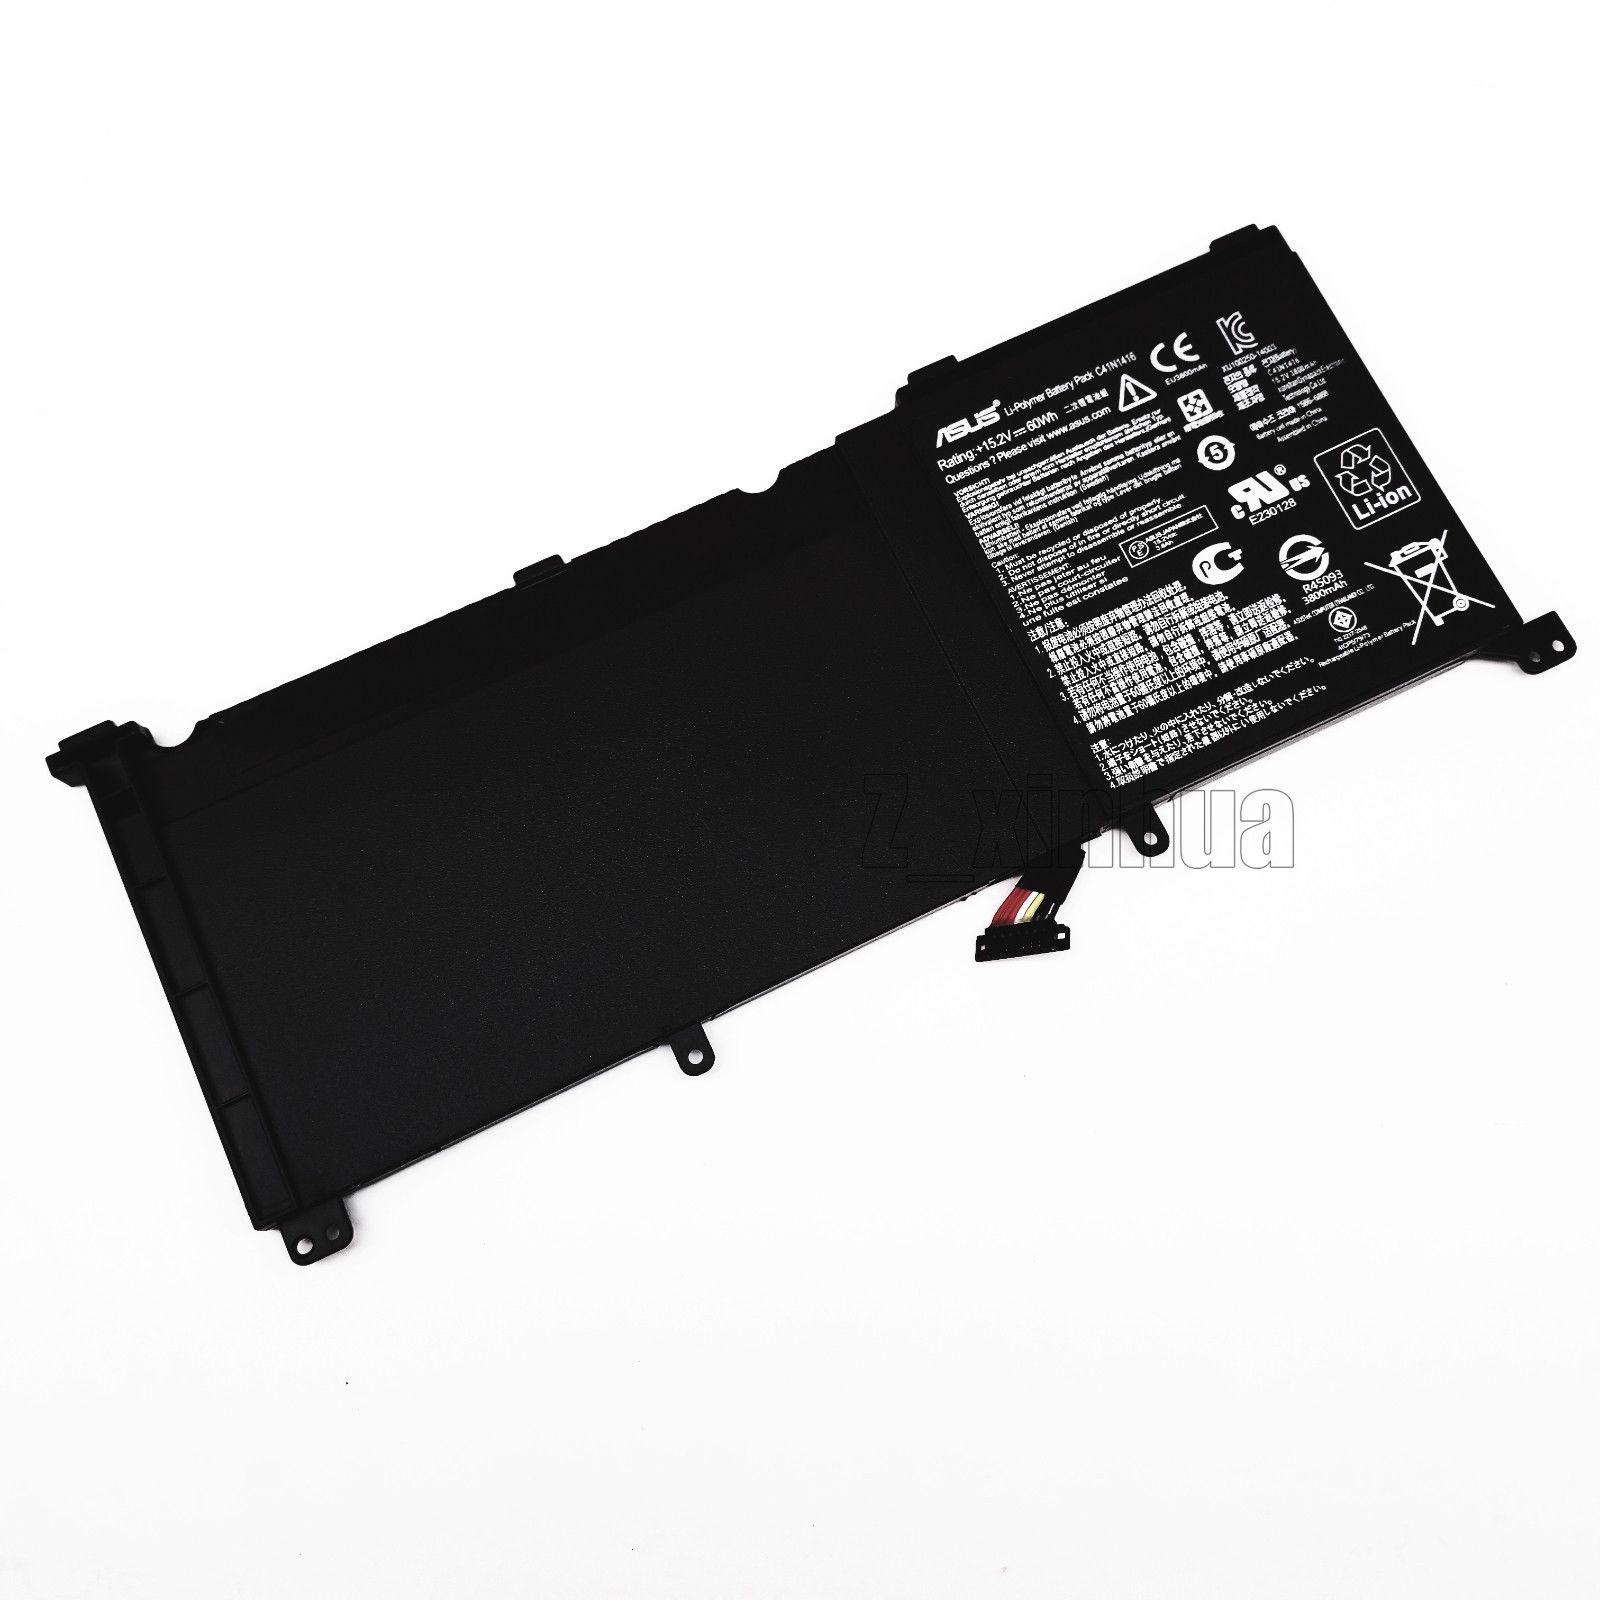 Asus UX501JWDS71T Laptop Battery 15.2V 4400mAh for Asus UX501JWDS71T Laptop